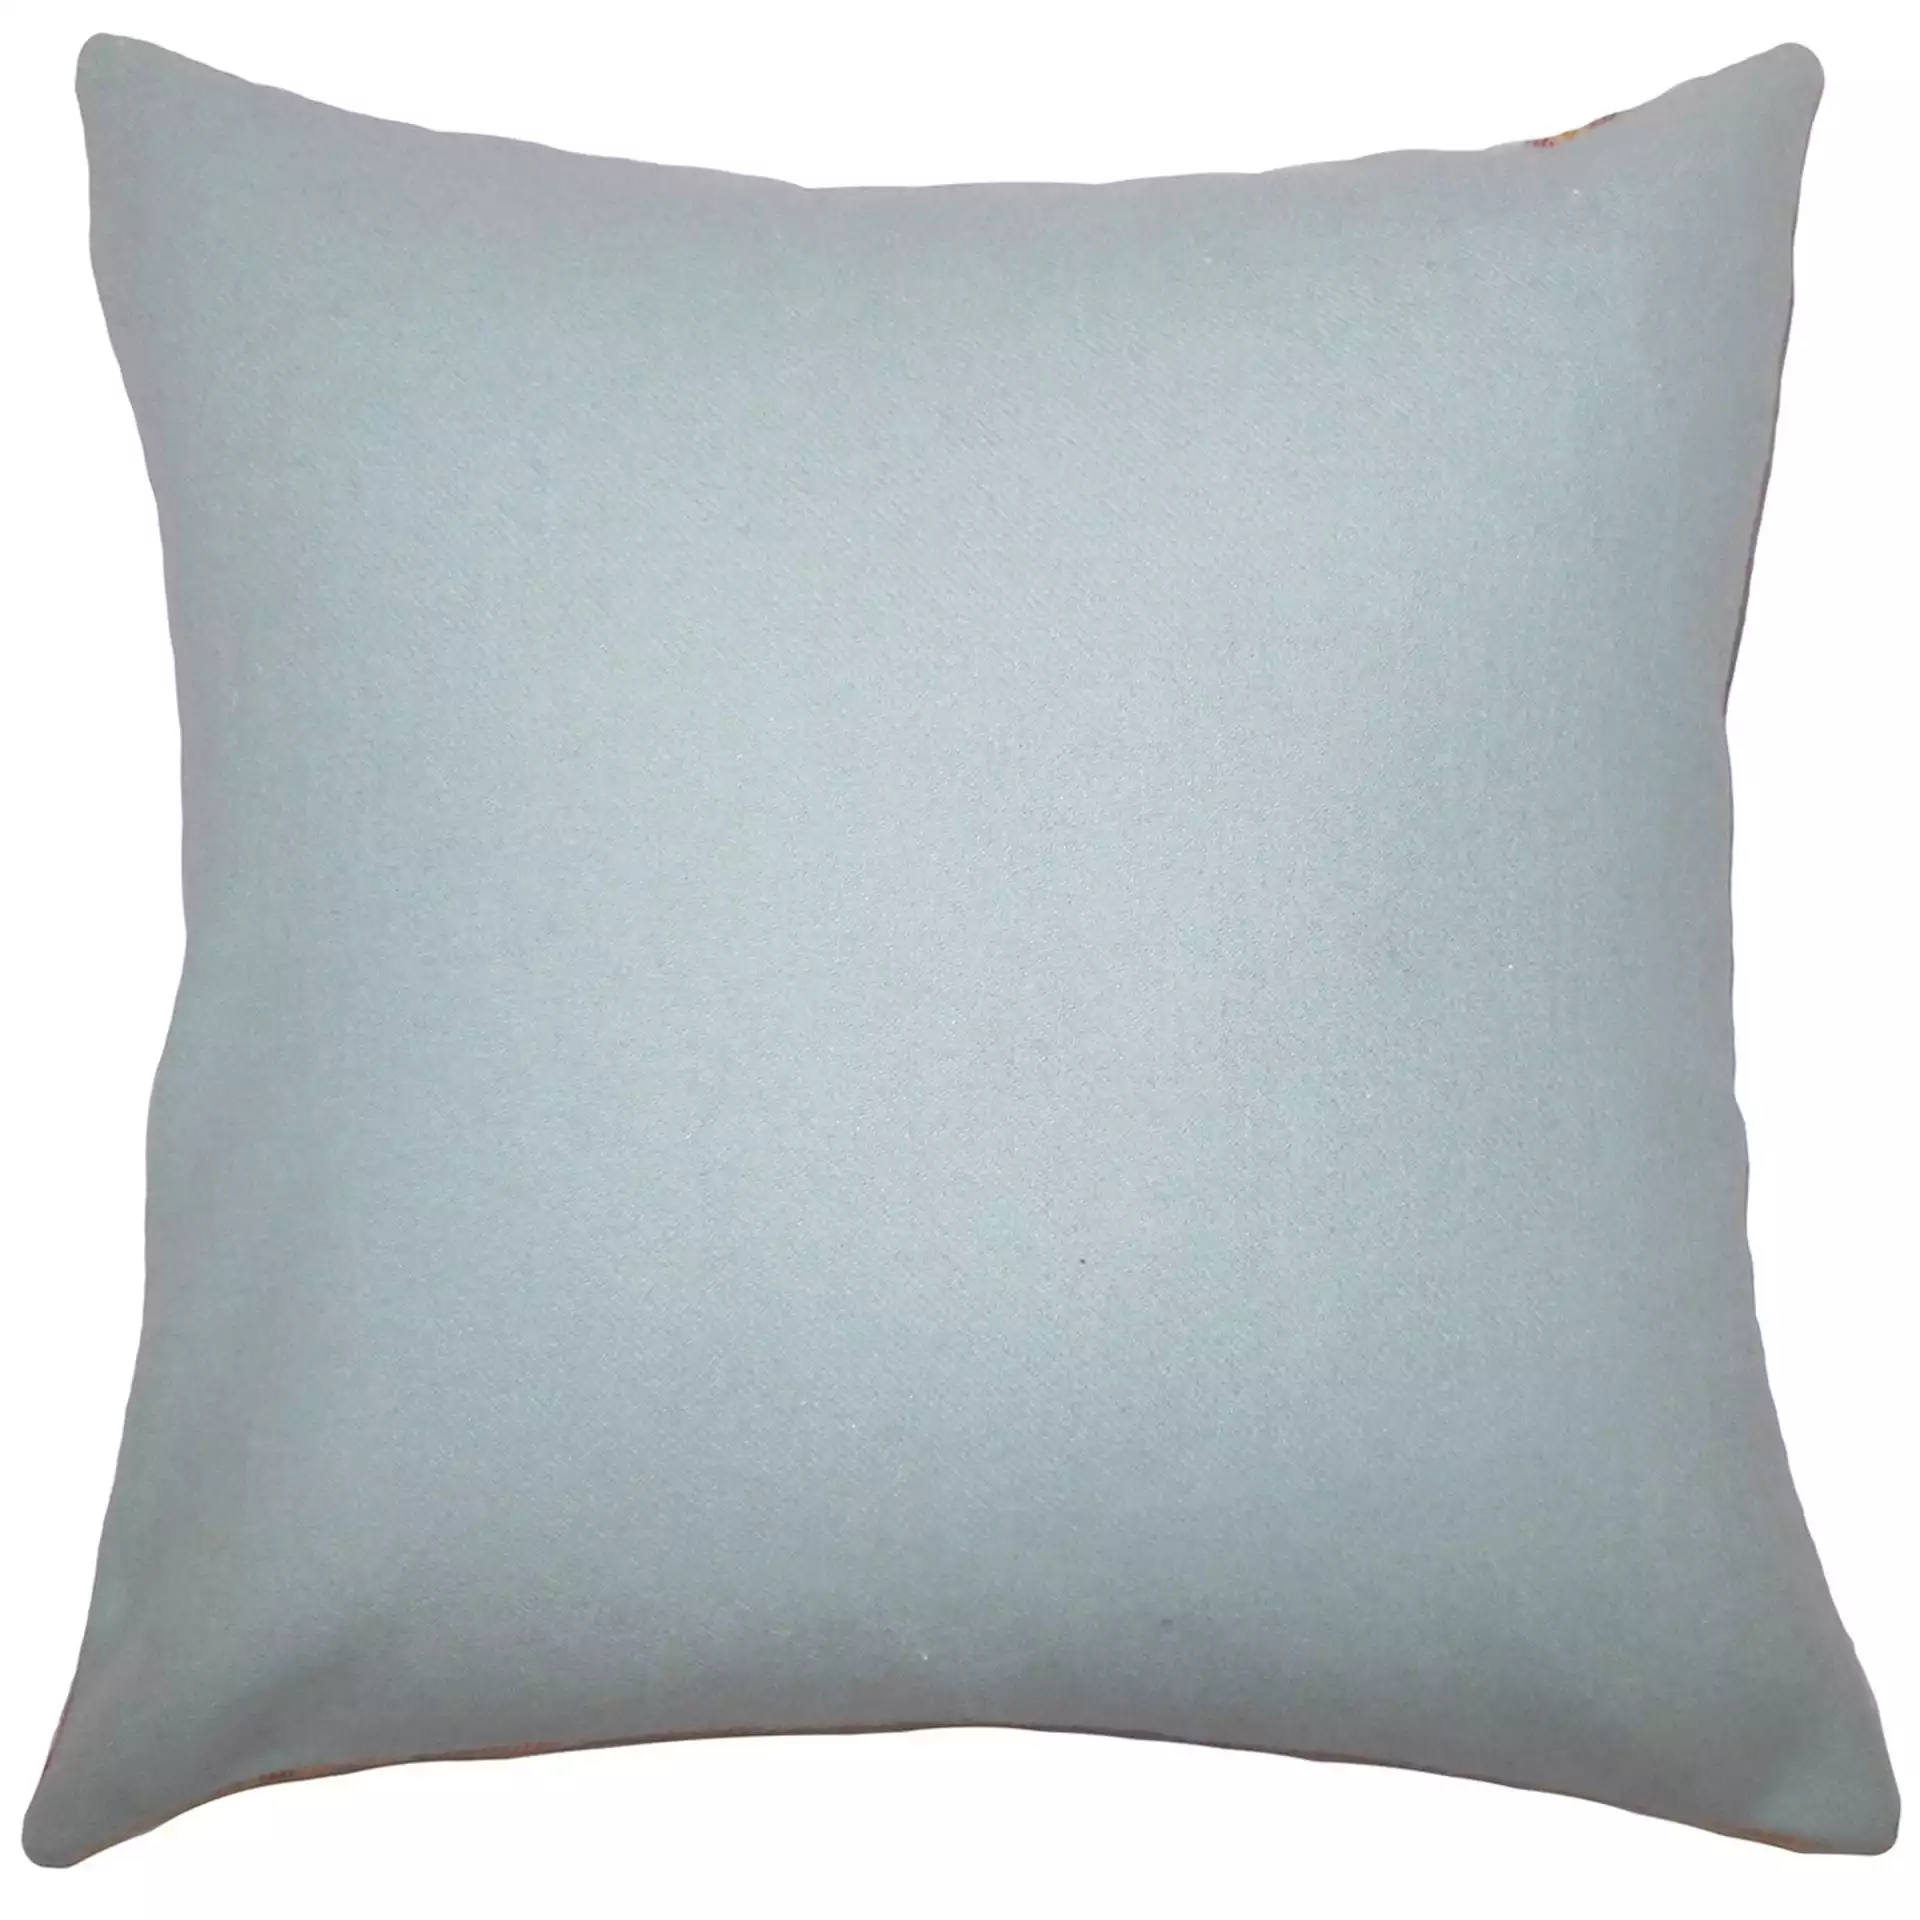 Yandel Solid Pillow - 20" x 20" - Down Insert